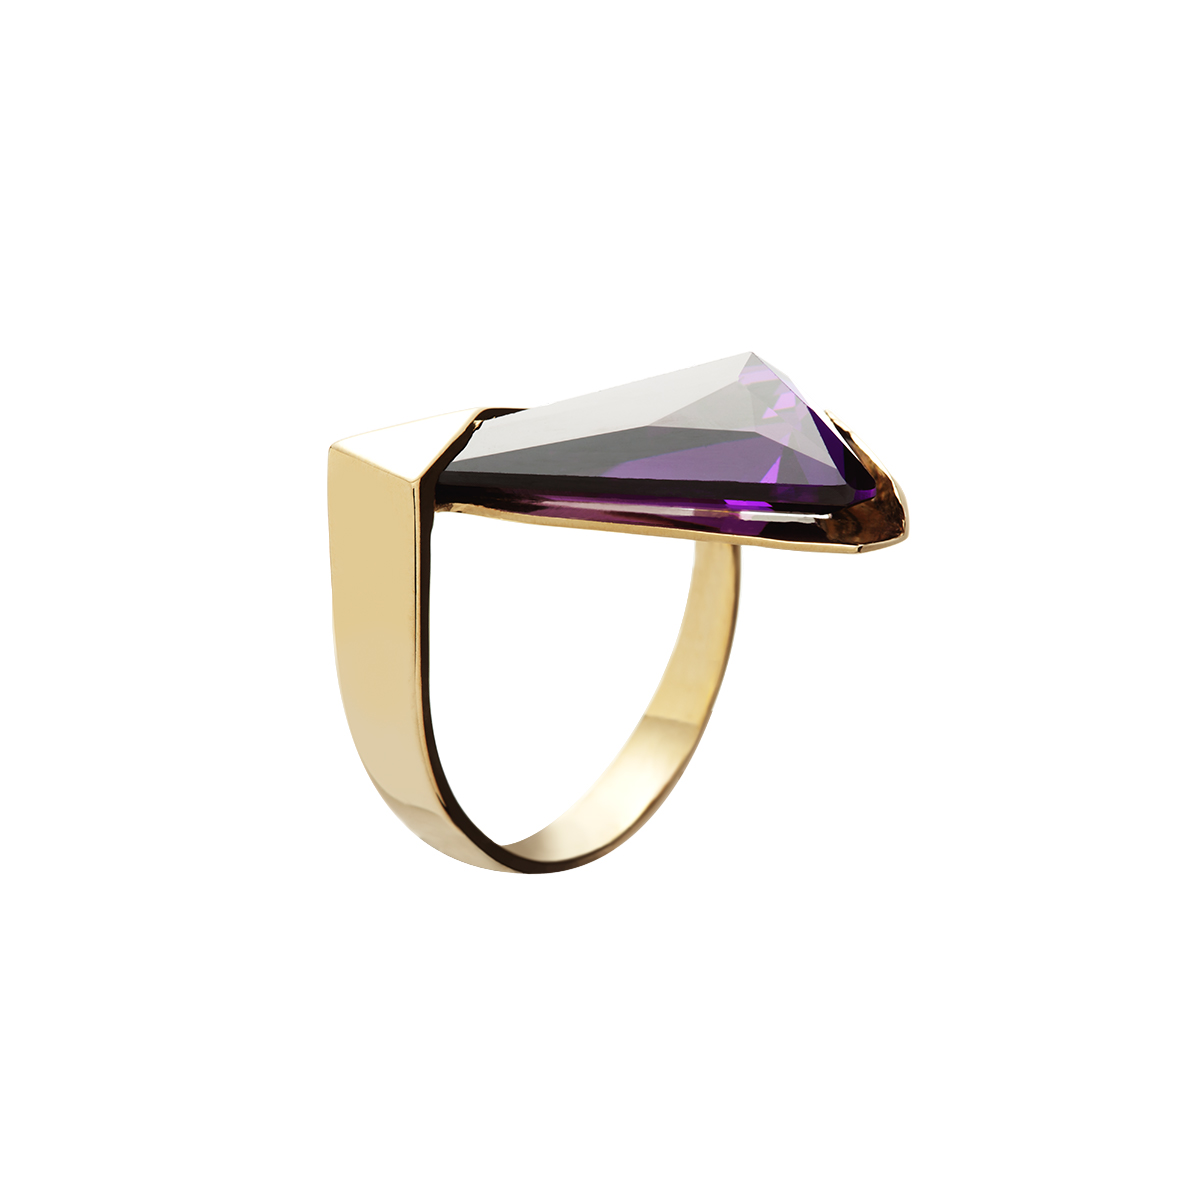 Kua handmade ring in 9k or 18k gold and violet hydrothermal quartz 1 designed by Belen Bajo